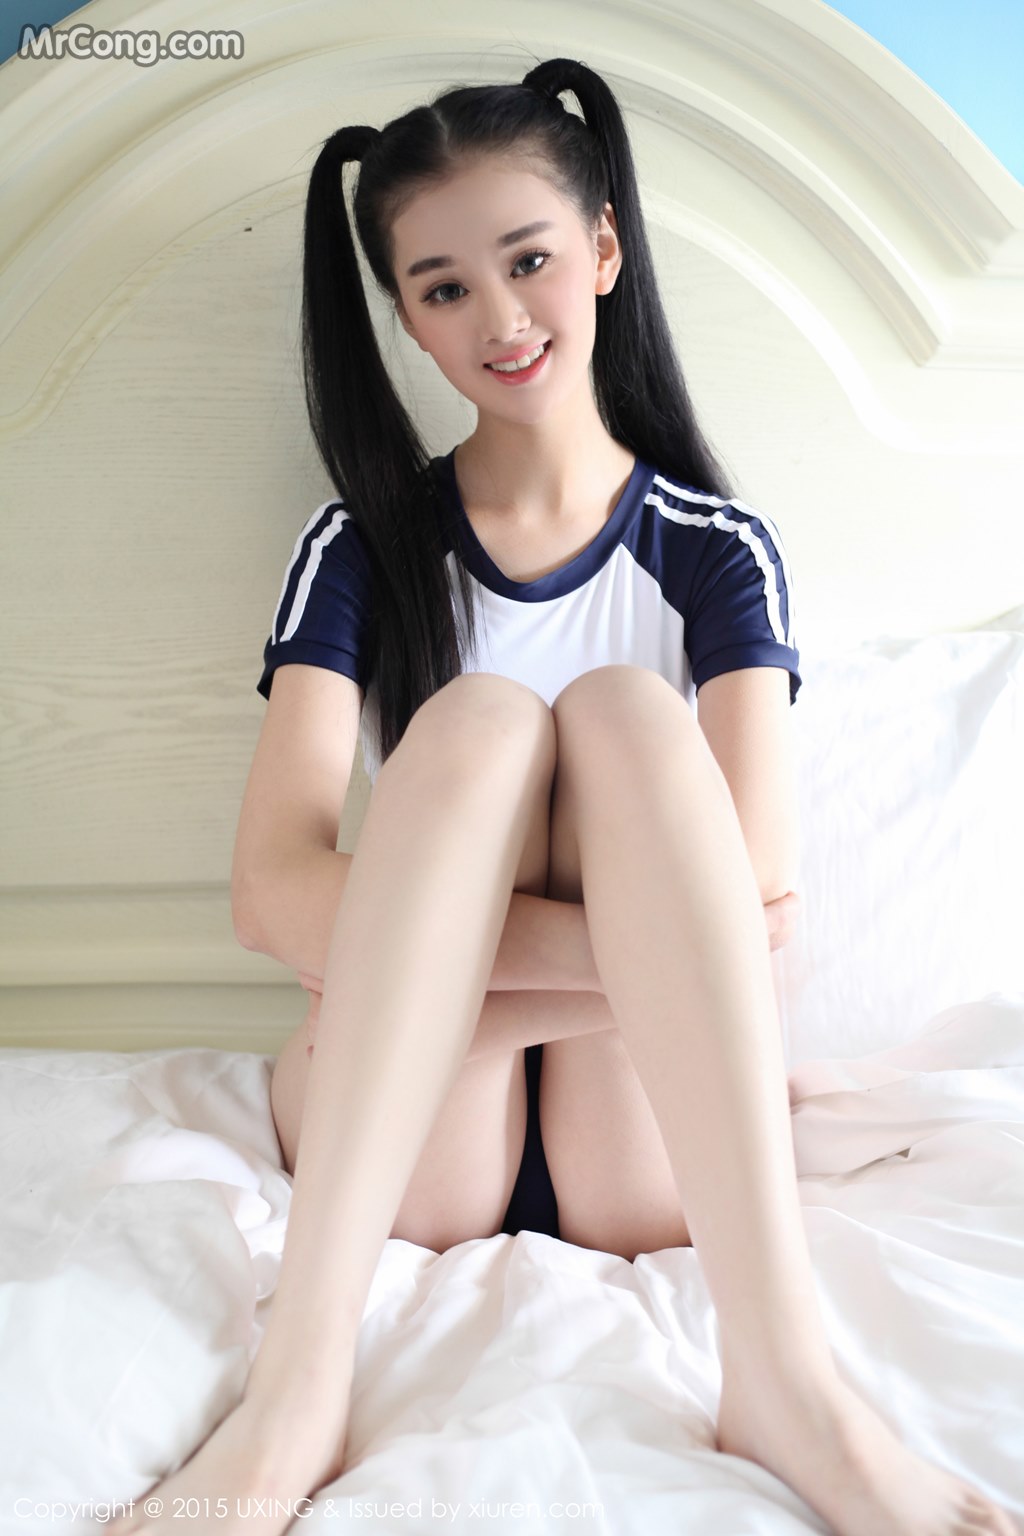 UXING Vol.027: Model Wen Xin Baby (温馨 baby) (45 pictures) photo 1-9